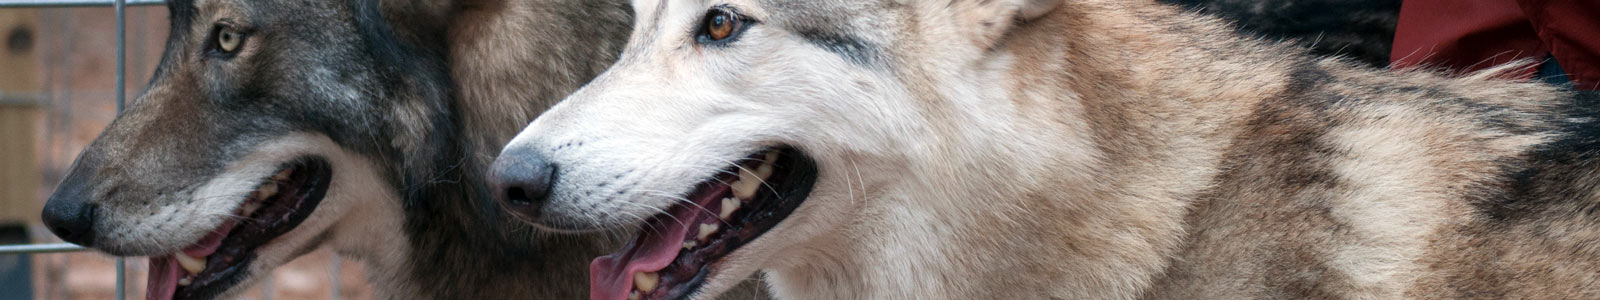 Texas Wolfdog Project Adoption Policy Header Image